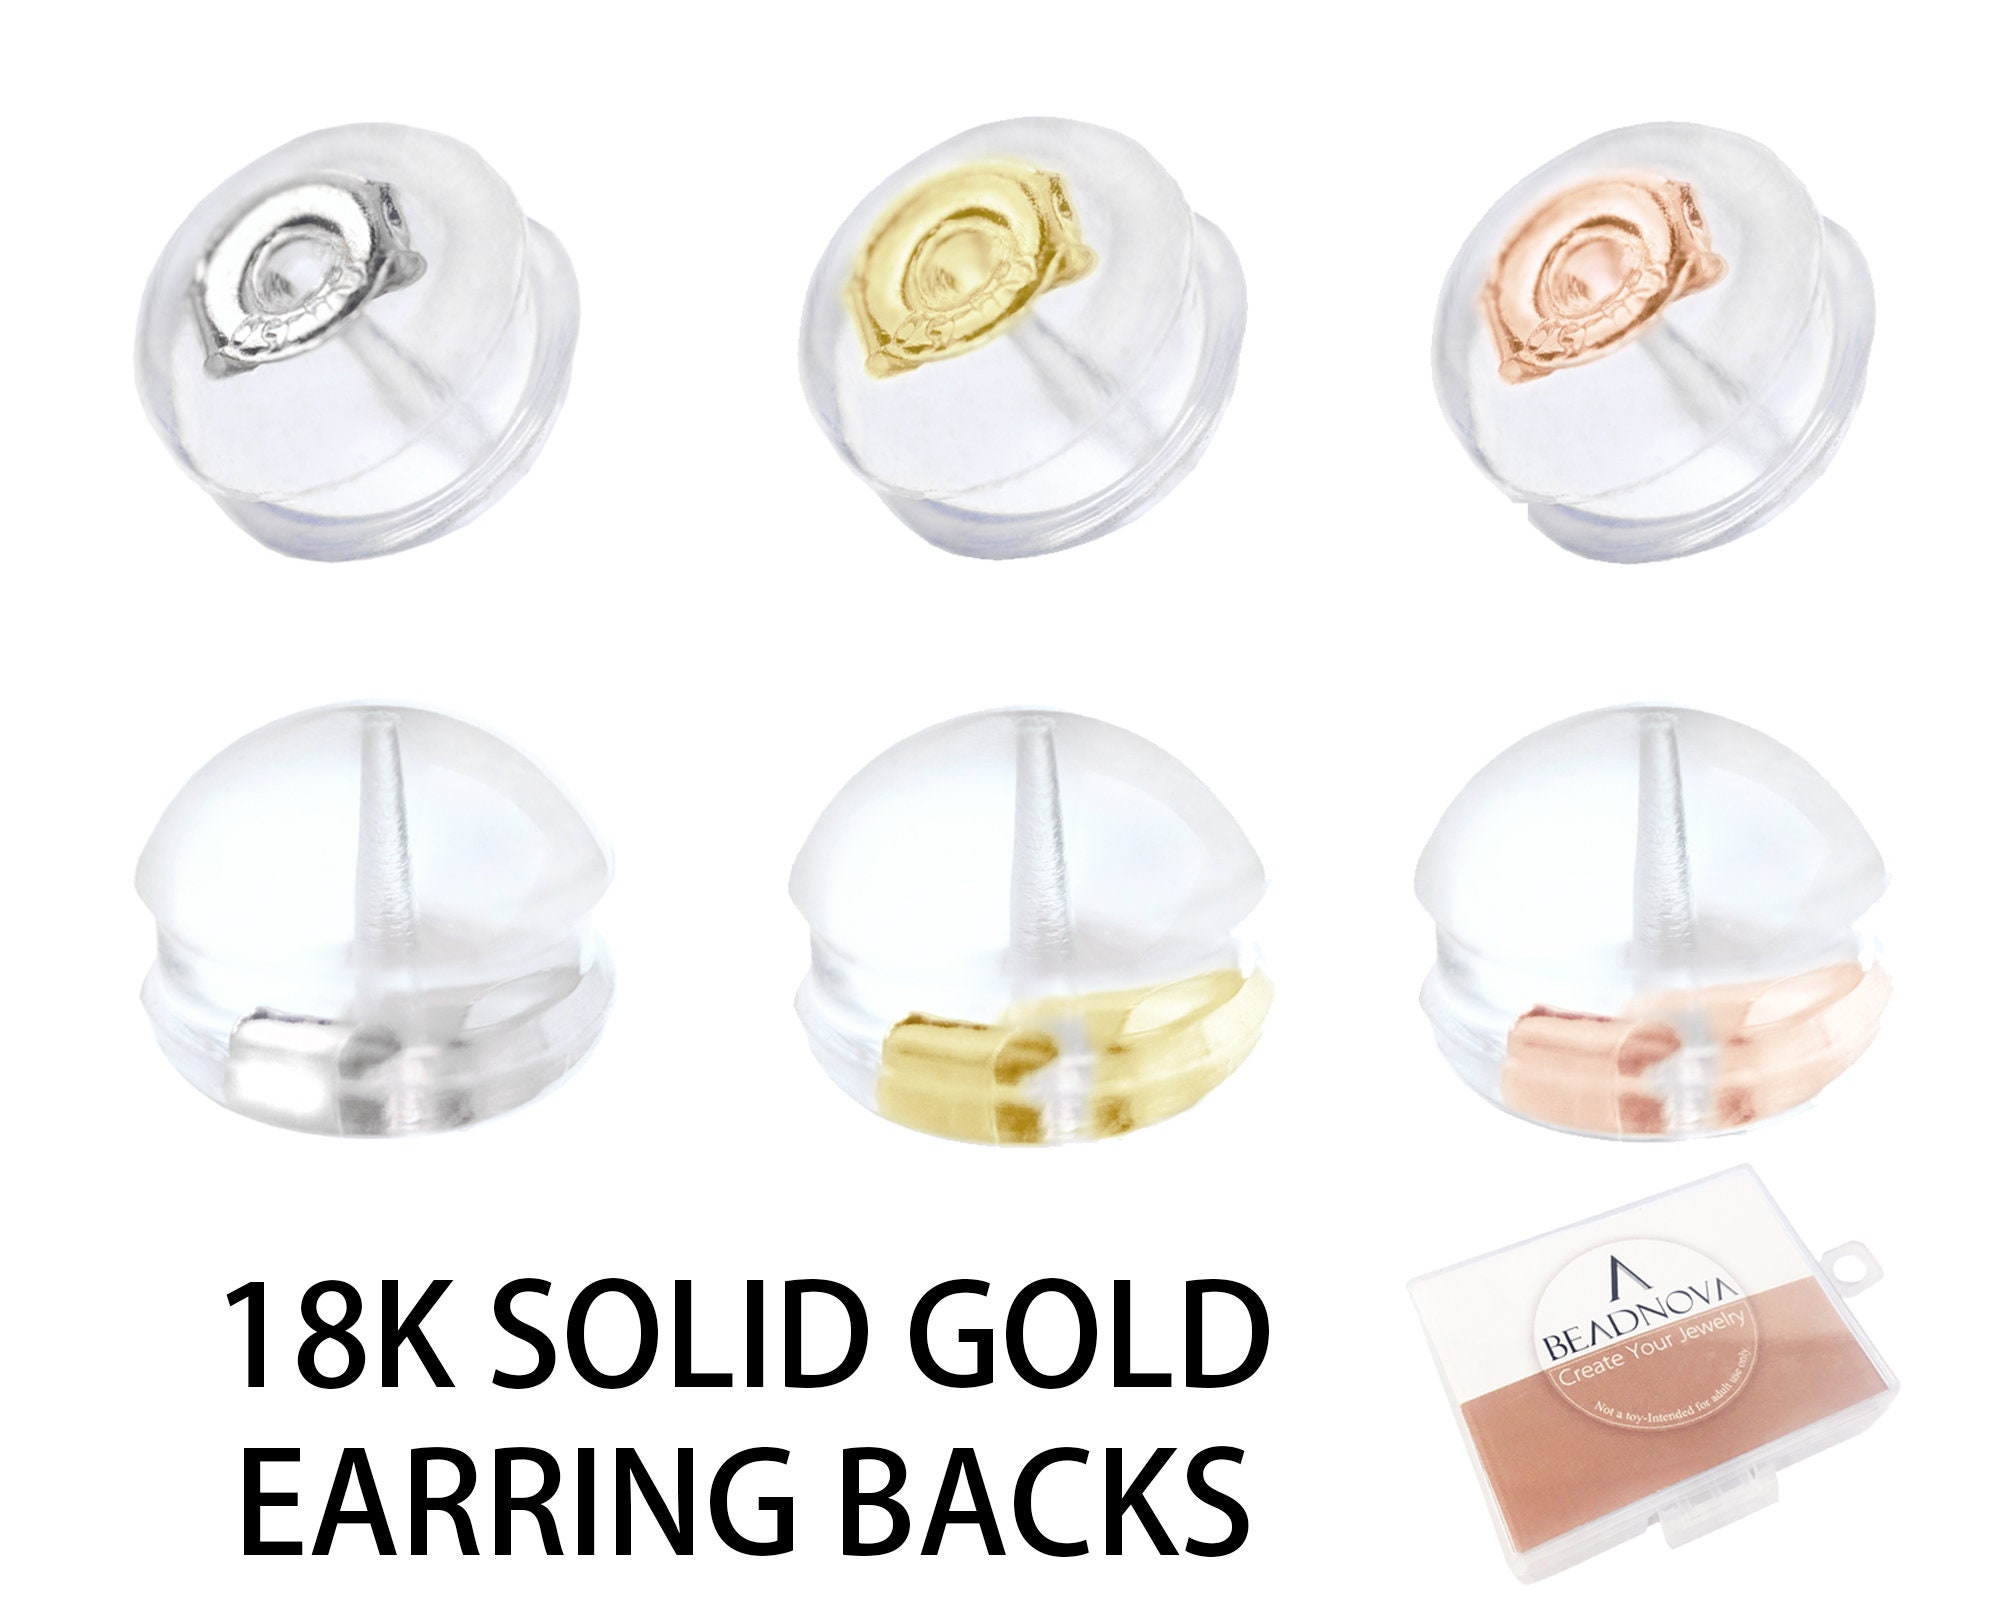  BEADNOVA 18K Gold Silicone Earring Backs for Posts Clear Rubber  Padded Mushroom Earring Backs Safety Hypoallergenic Earring Backings for  Studs (4pcs)